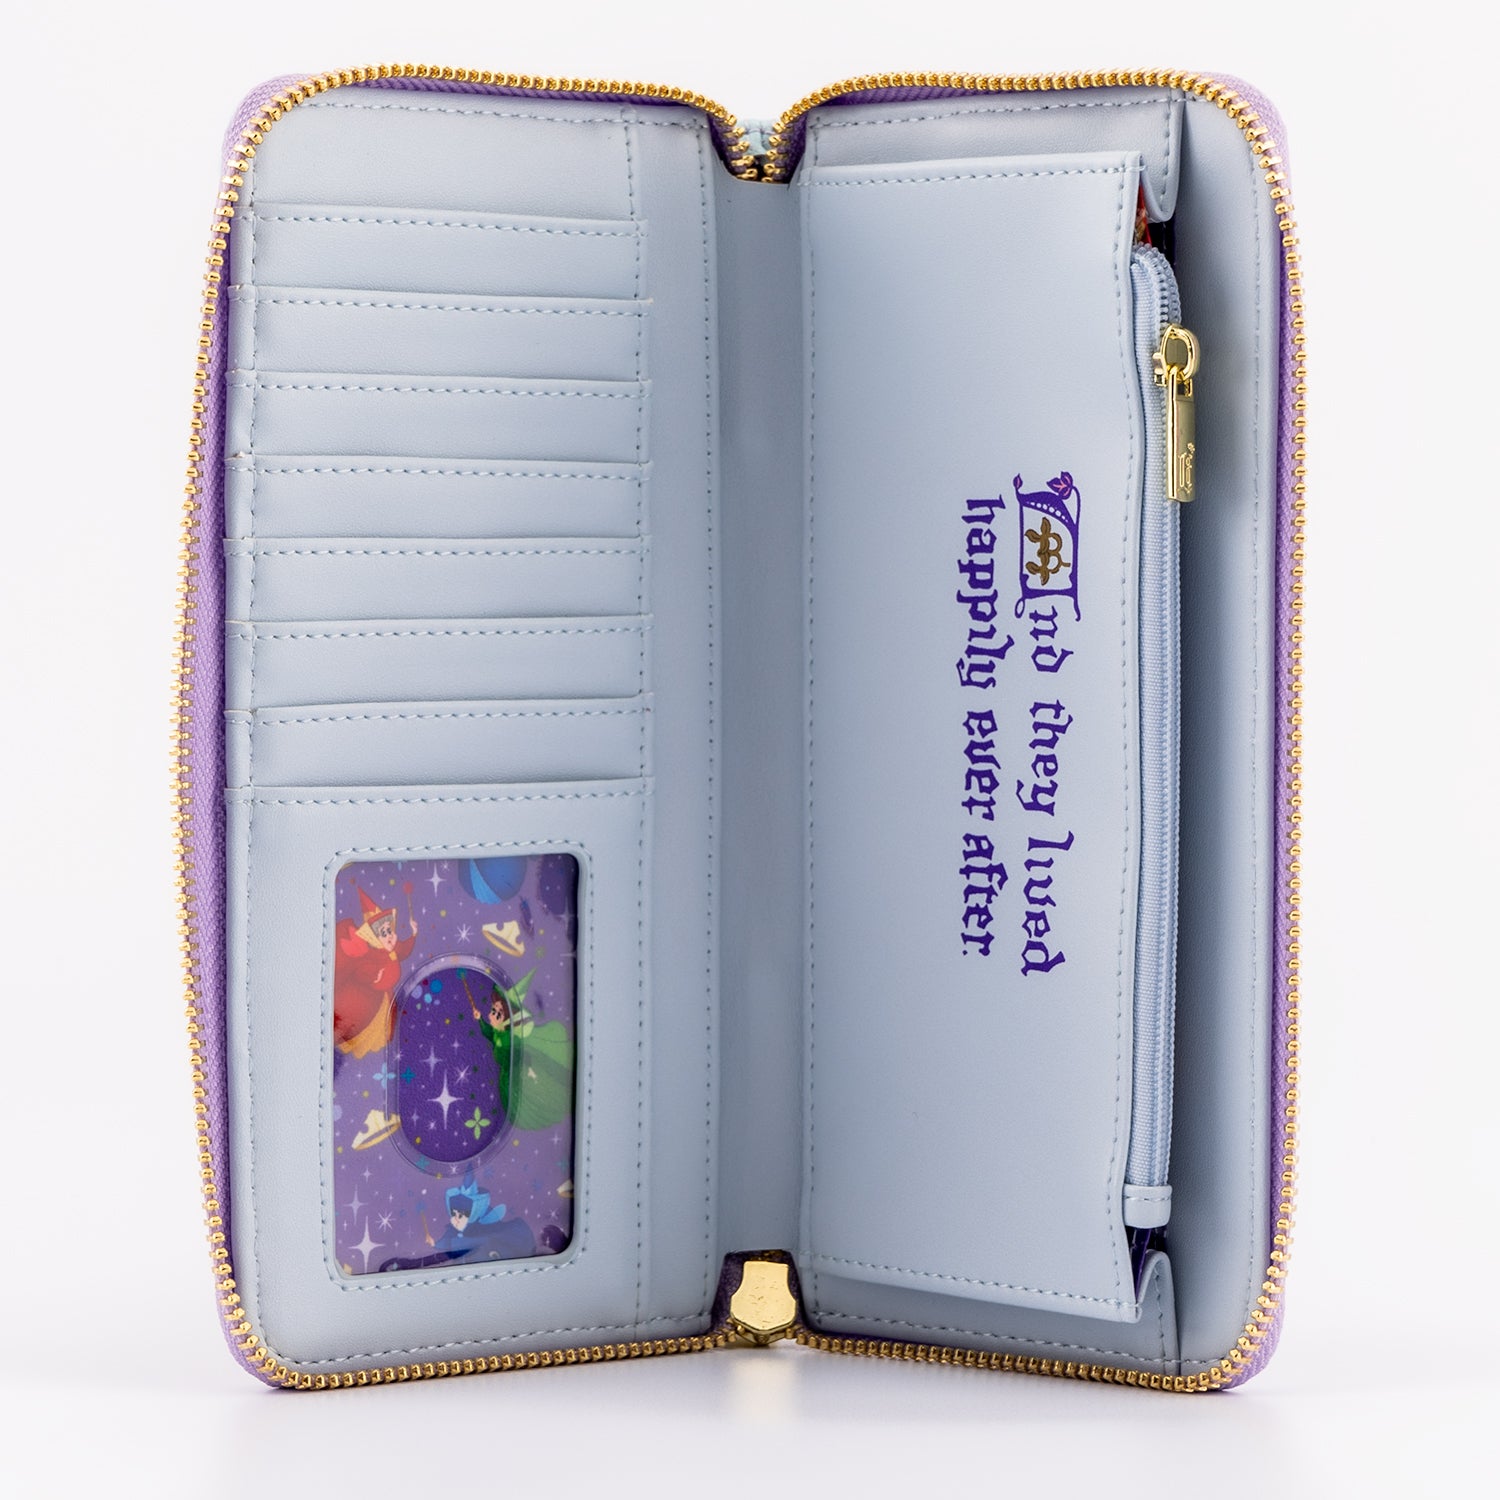 Disney | Princess Castle Series Sleeping Beauty Zip Around Wallet